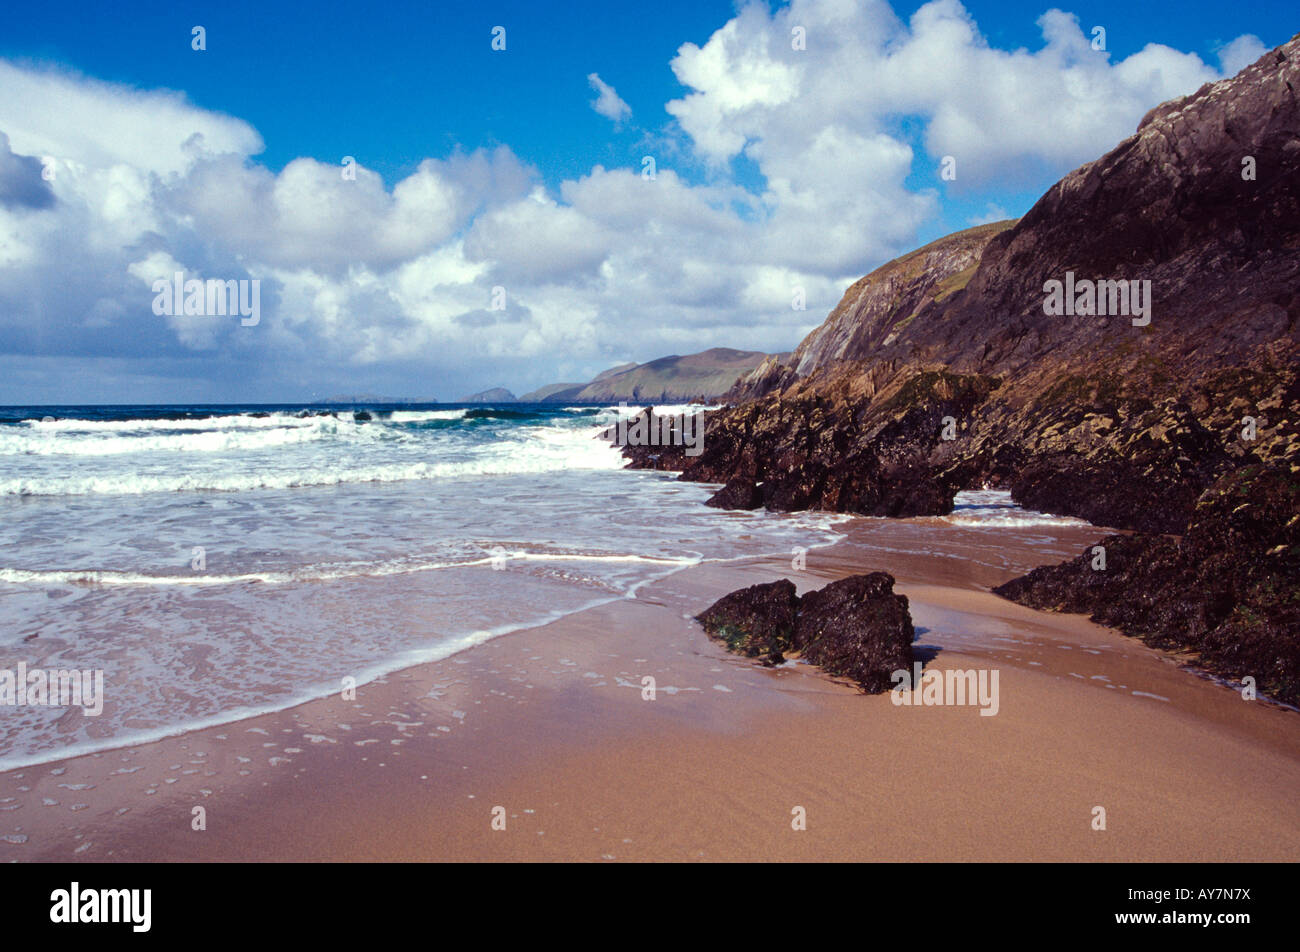 Halbinsel Dingle, county Kerry Irland am Strand in der Nähe von Clogher, head Ryans Tochter Filmset Lage Stockfoto